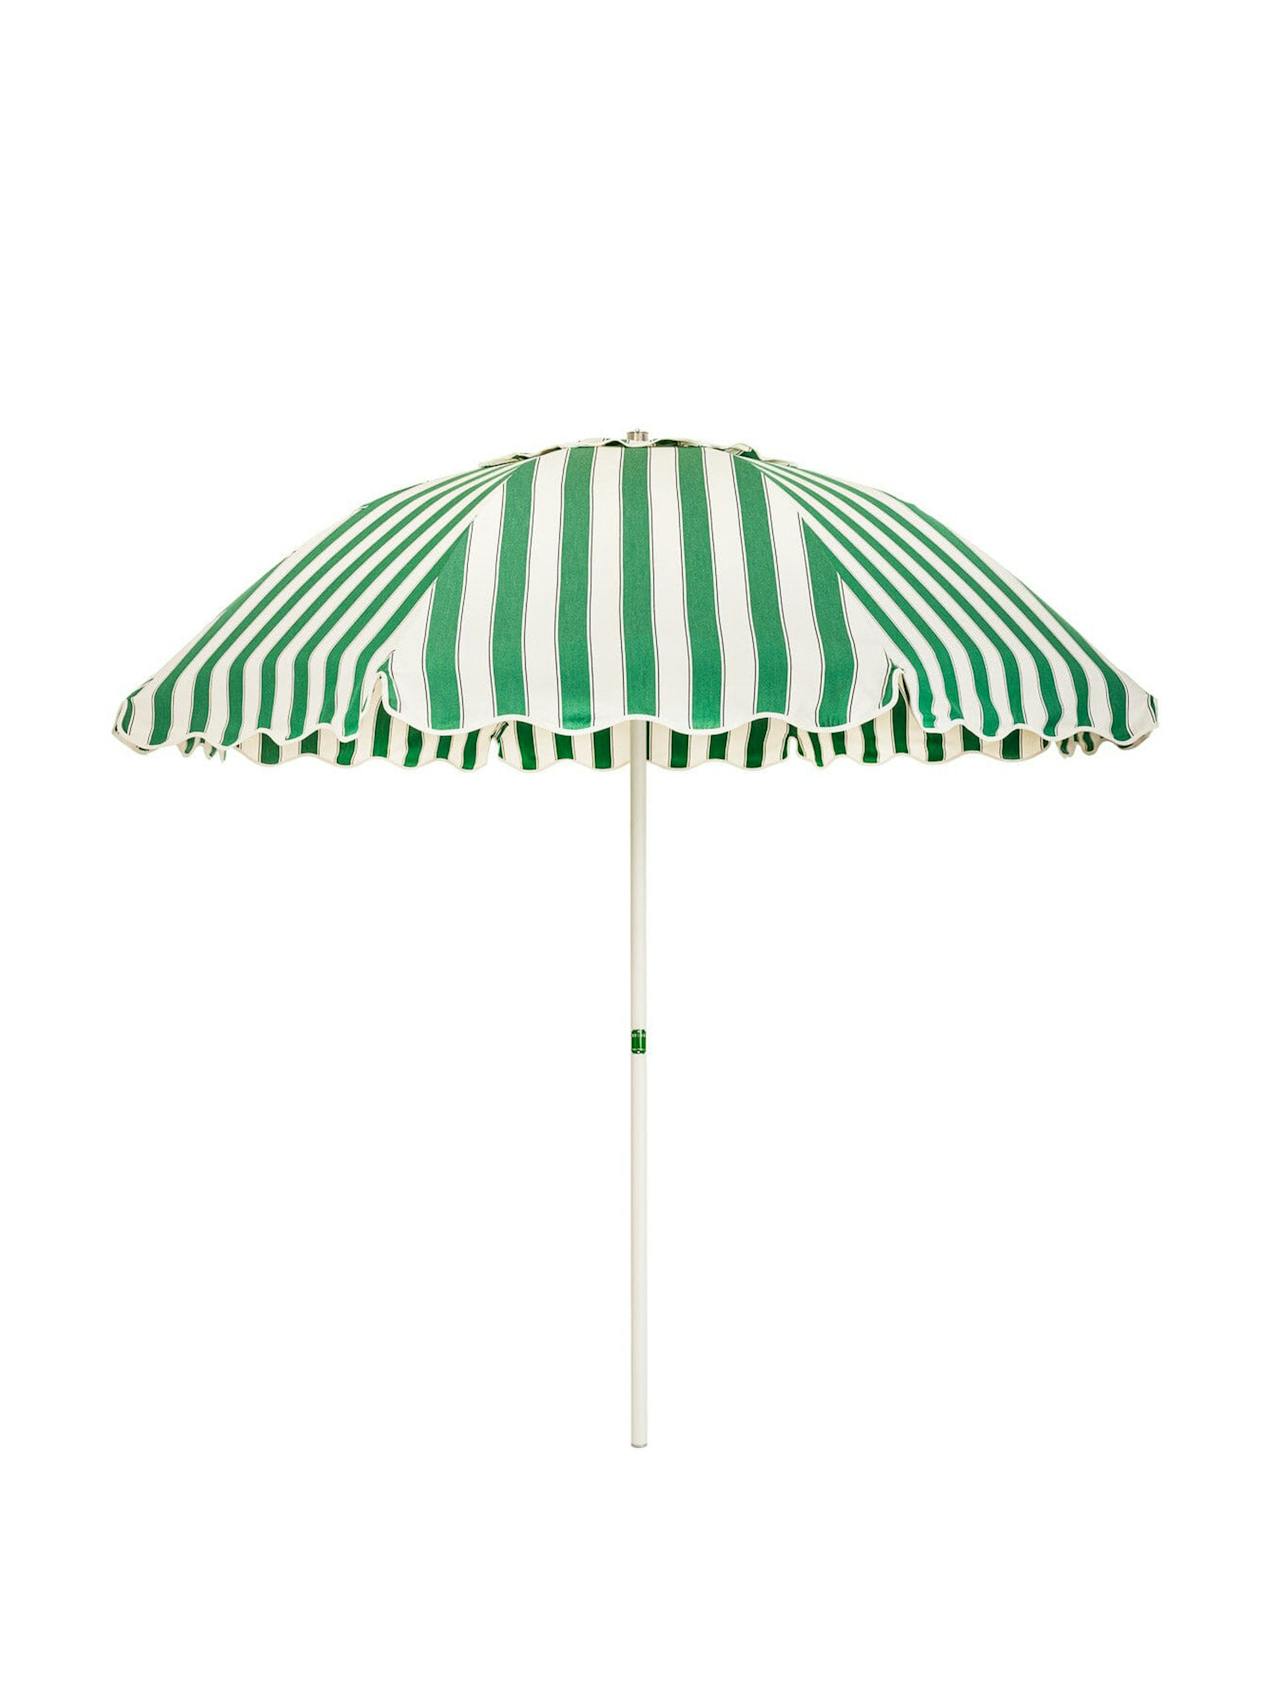 The patio umbrella